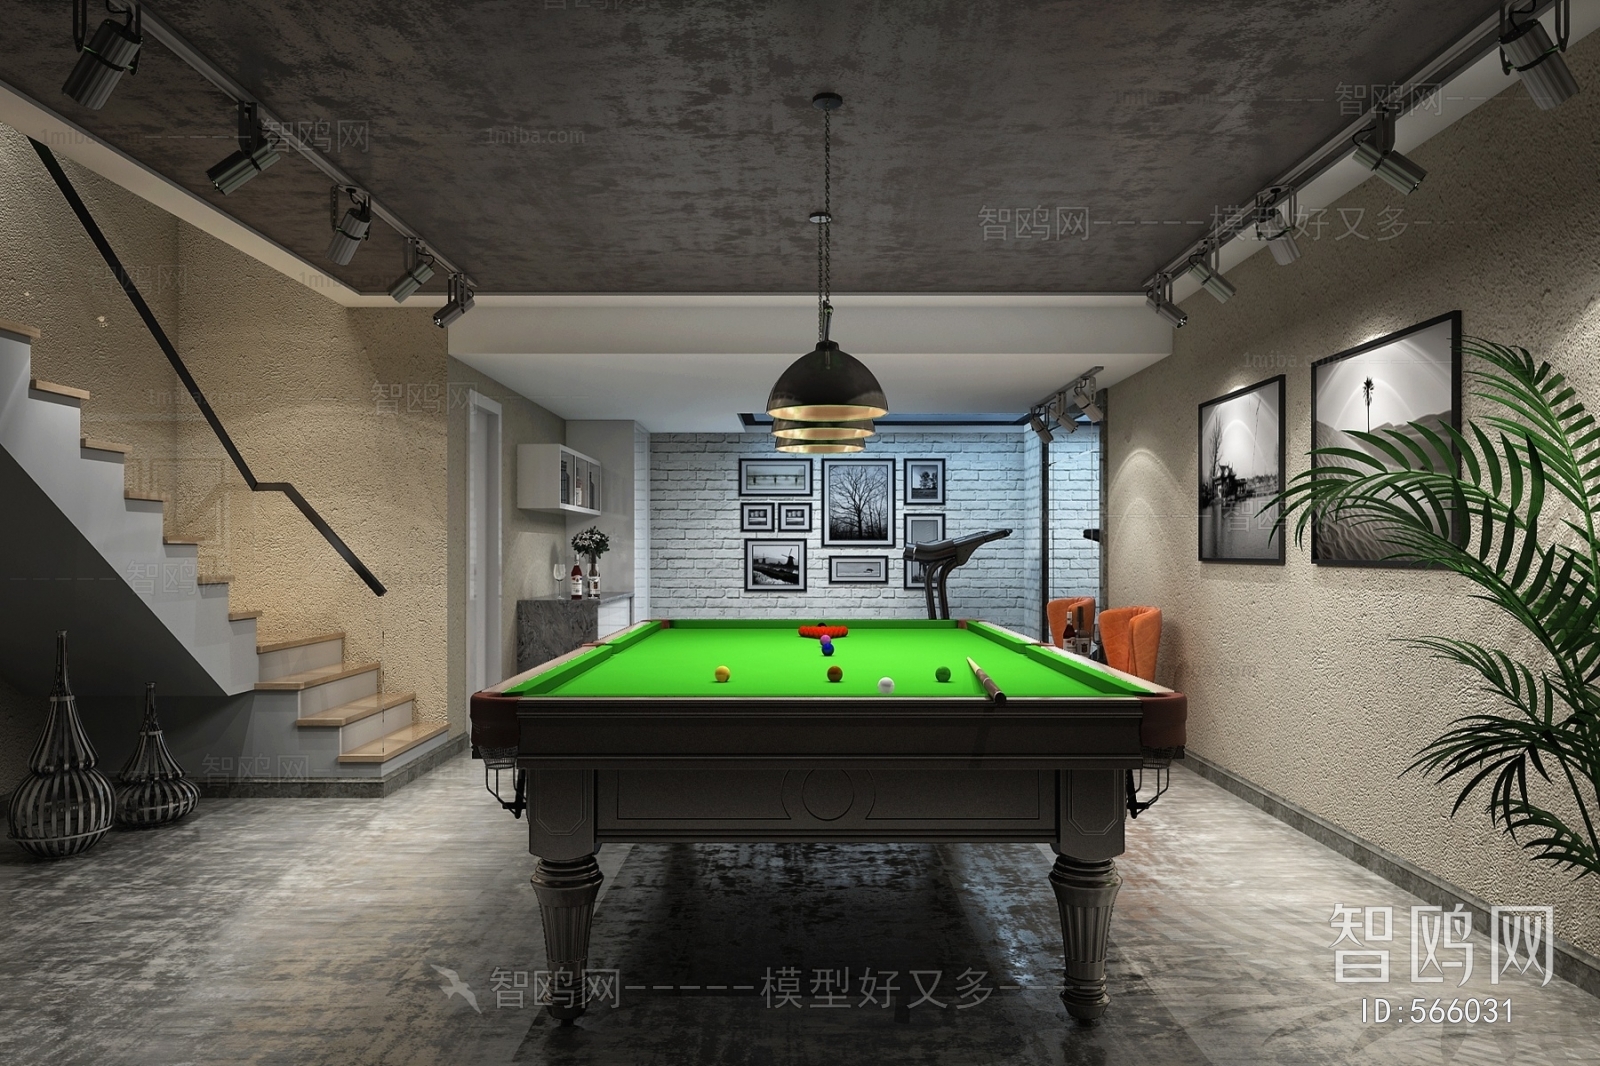 Industrial Style Billiards Room